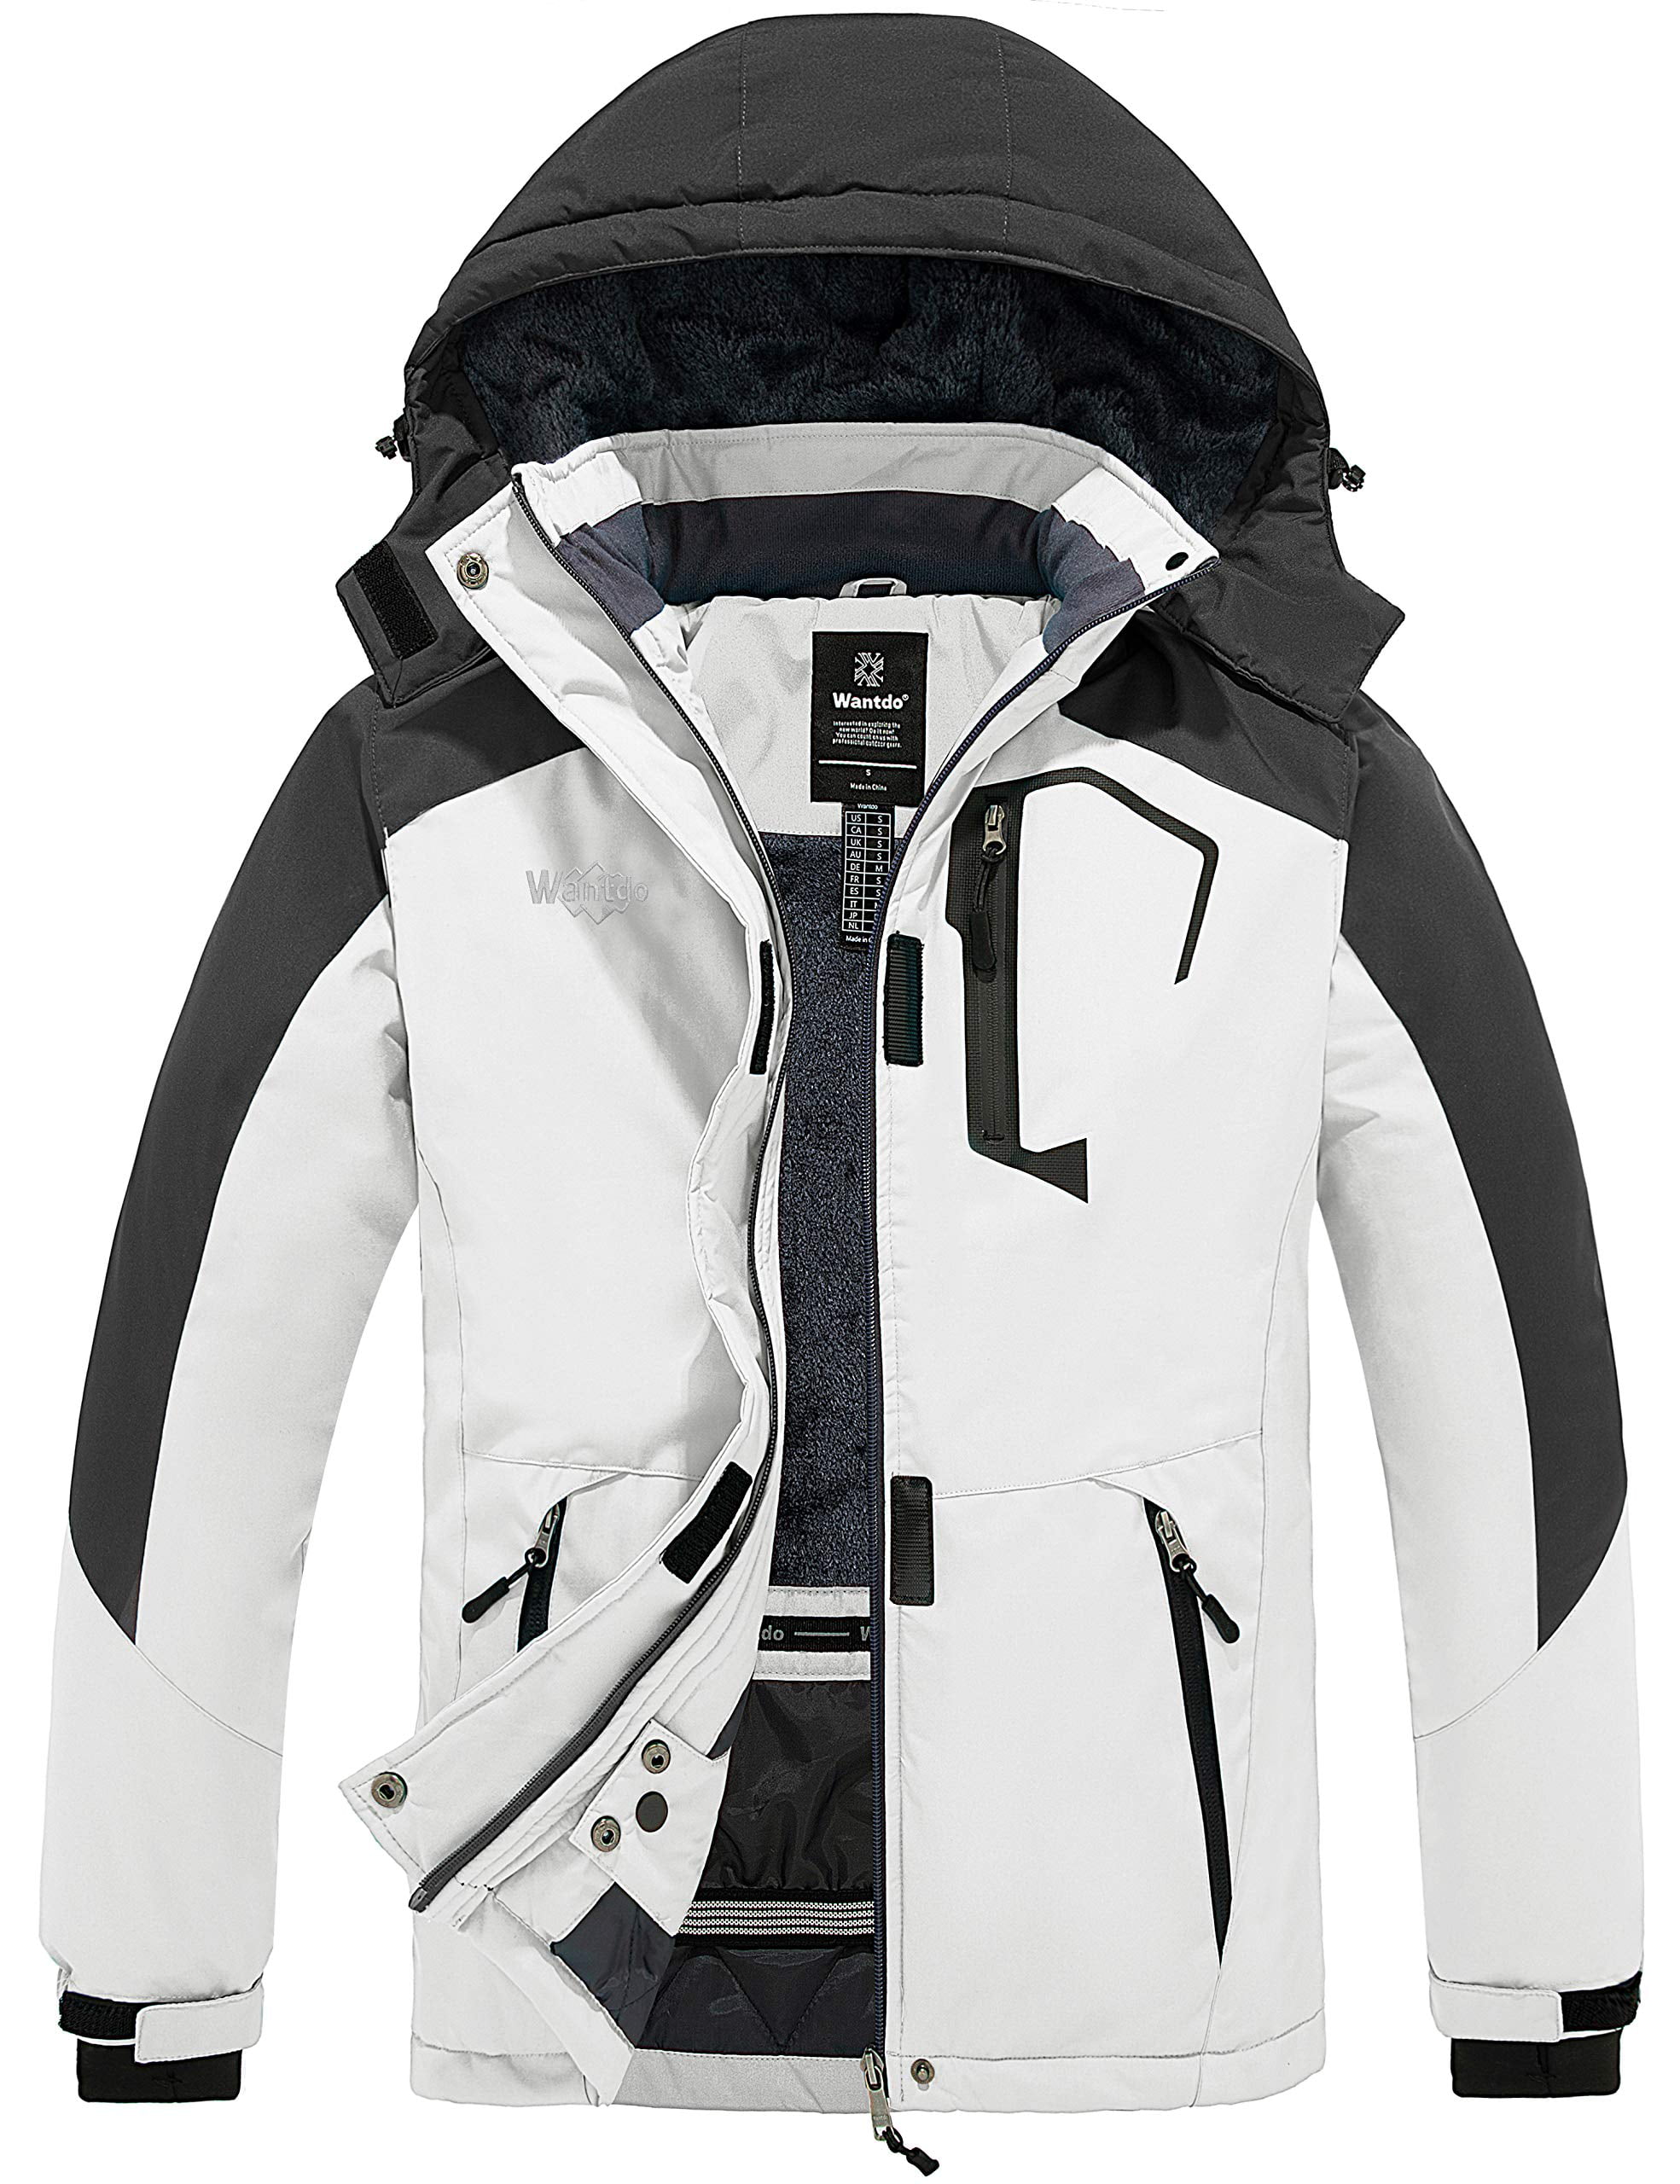 Wantdo Boy's Waterproof Ski Jacket Fleece Snowboarding Jackets Warm Thick Winter Coat Hooded Raincoats 